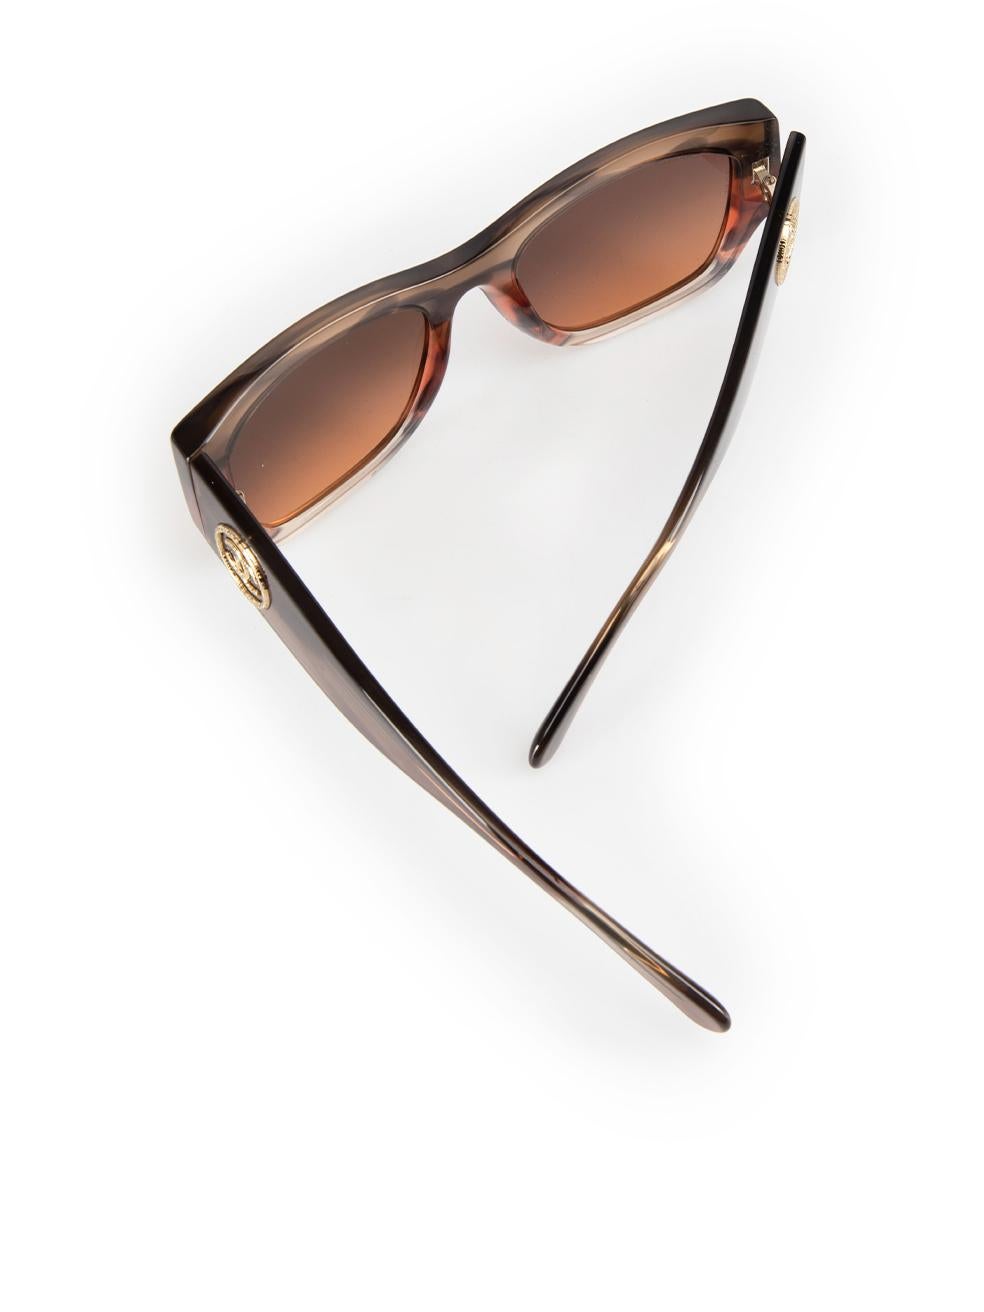 Chanel Brown & Orange Rectangle Sunglasses For Sale 3